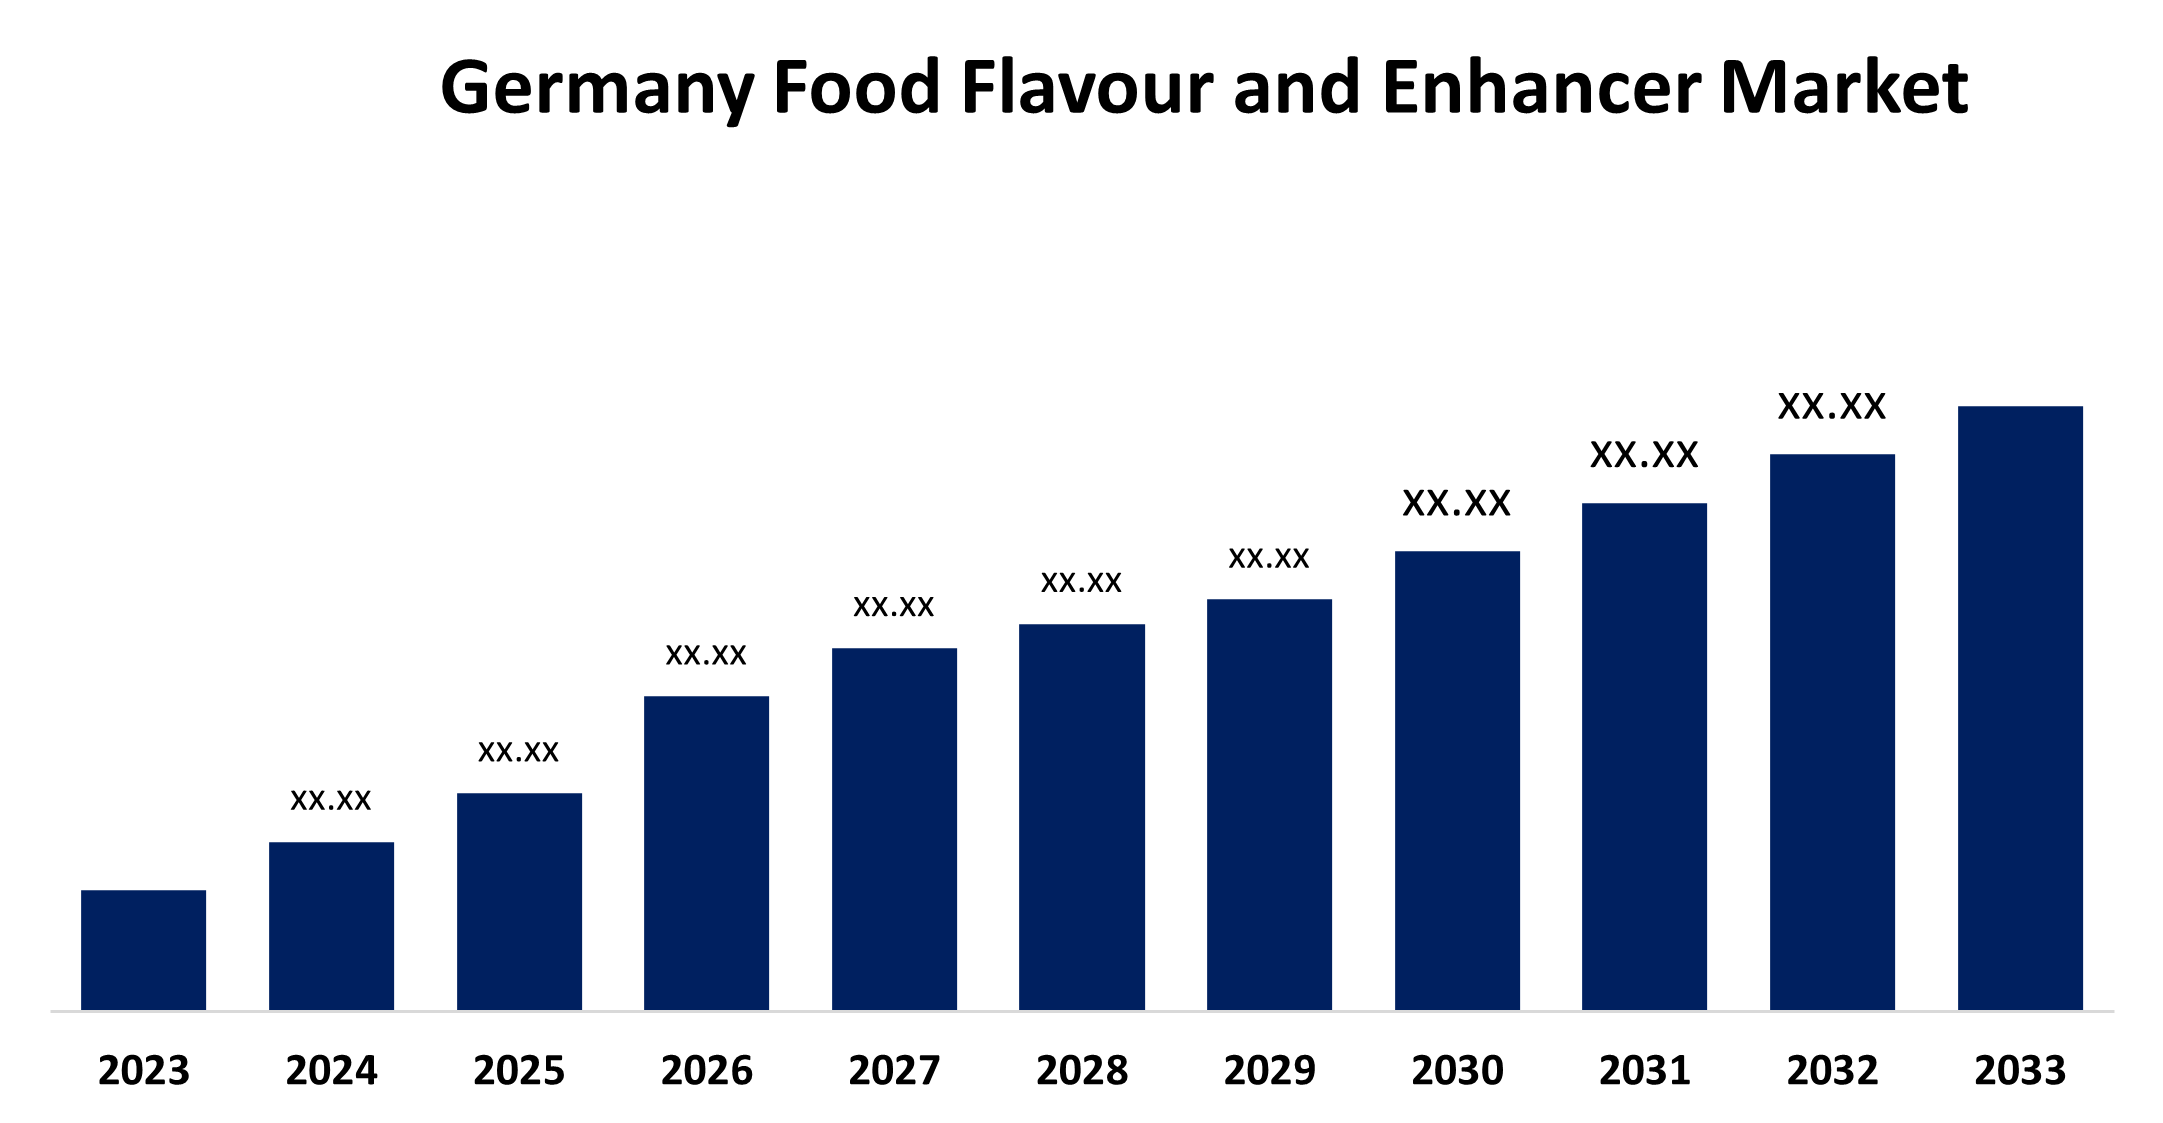 Germany Food Flavour and Enhancer Market